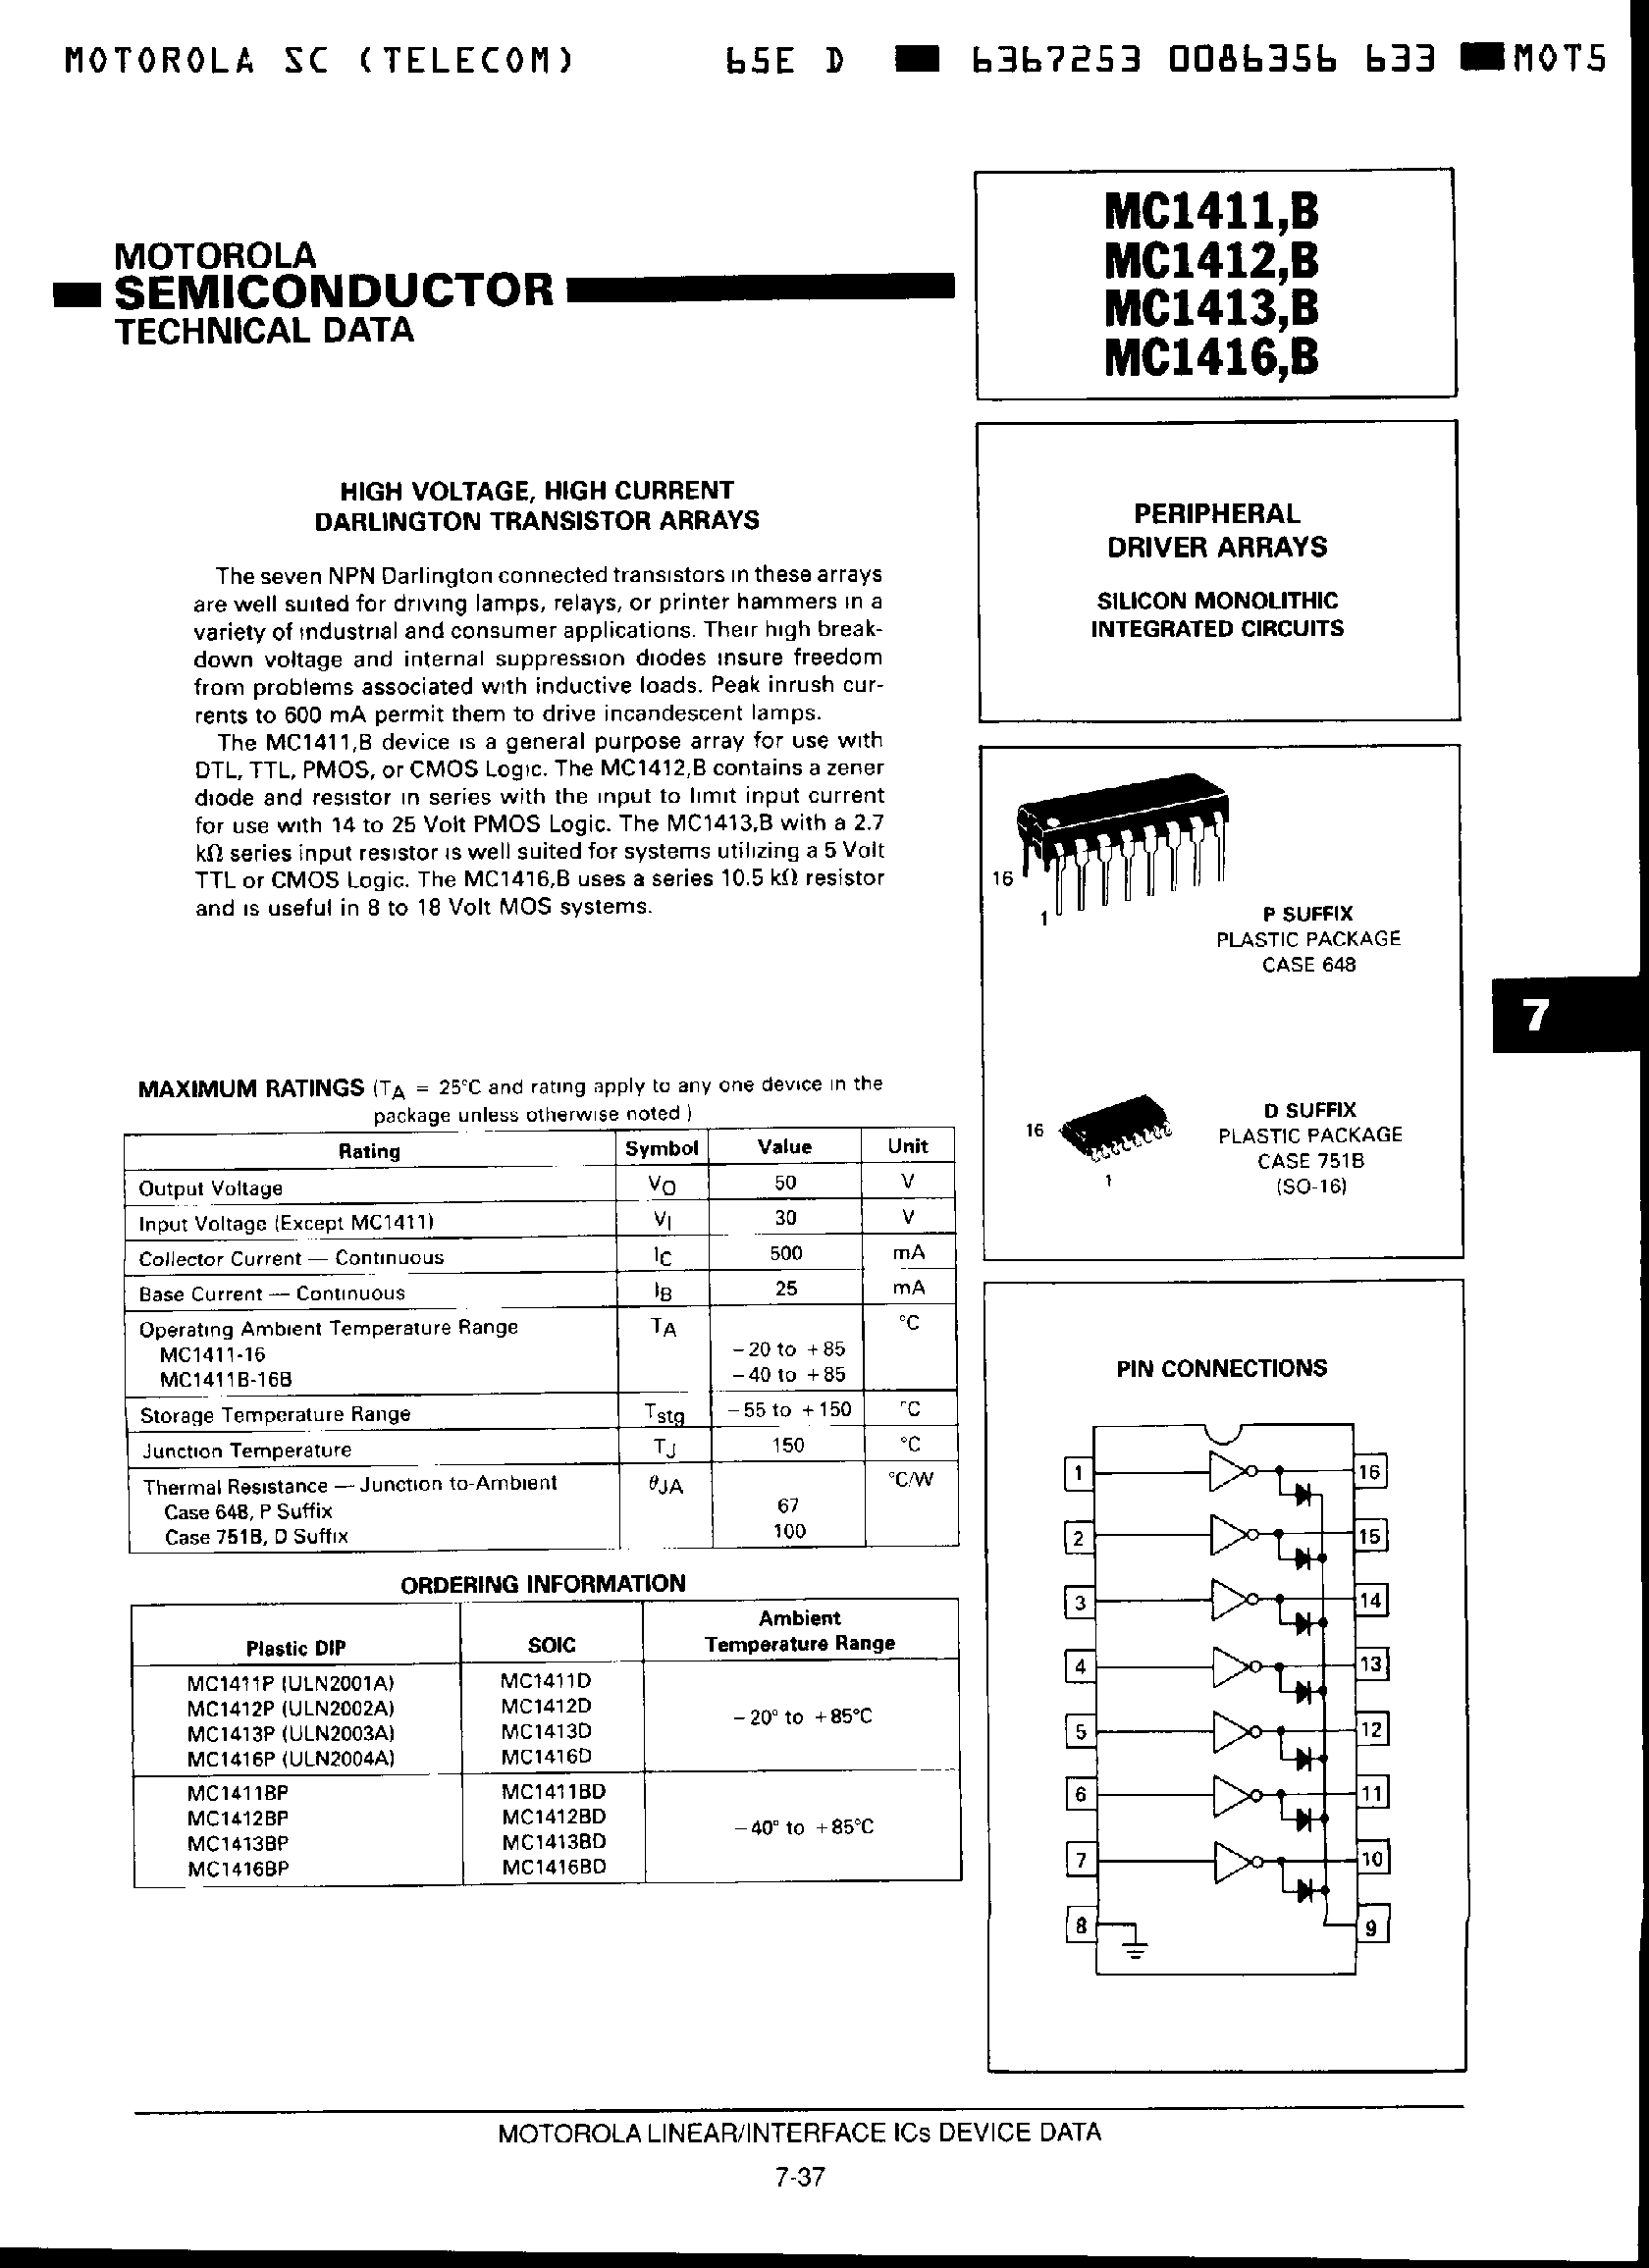 Datasheet MC1411BP - PERIPHERAL DRIVER ARRAYS page 1